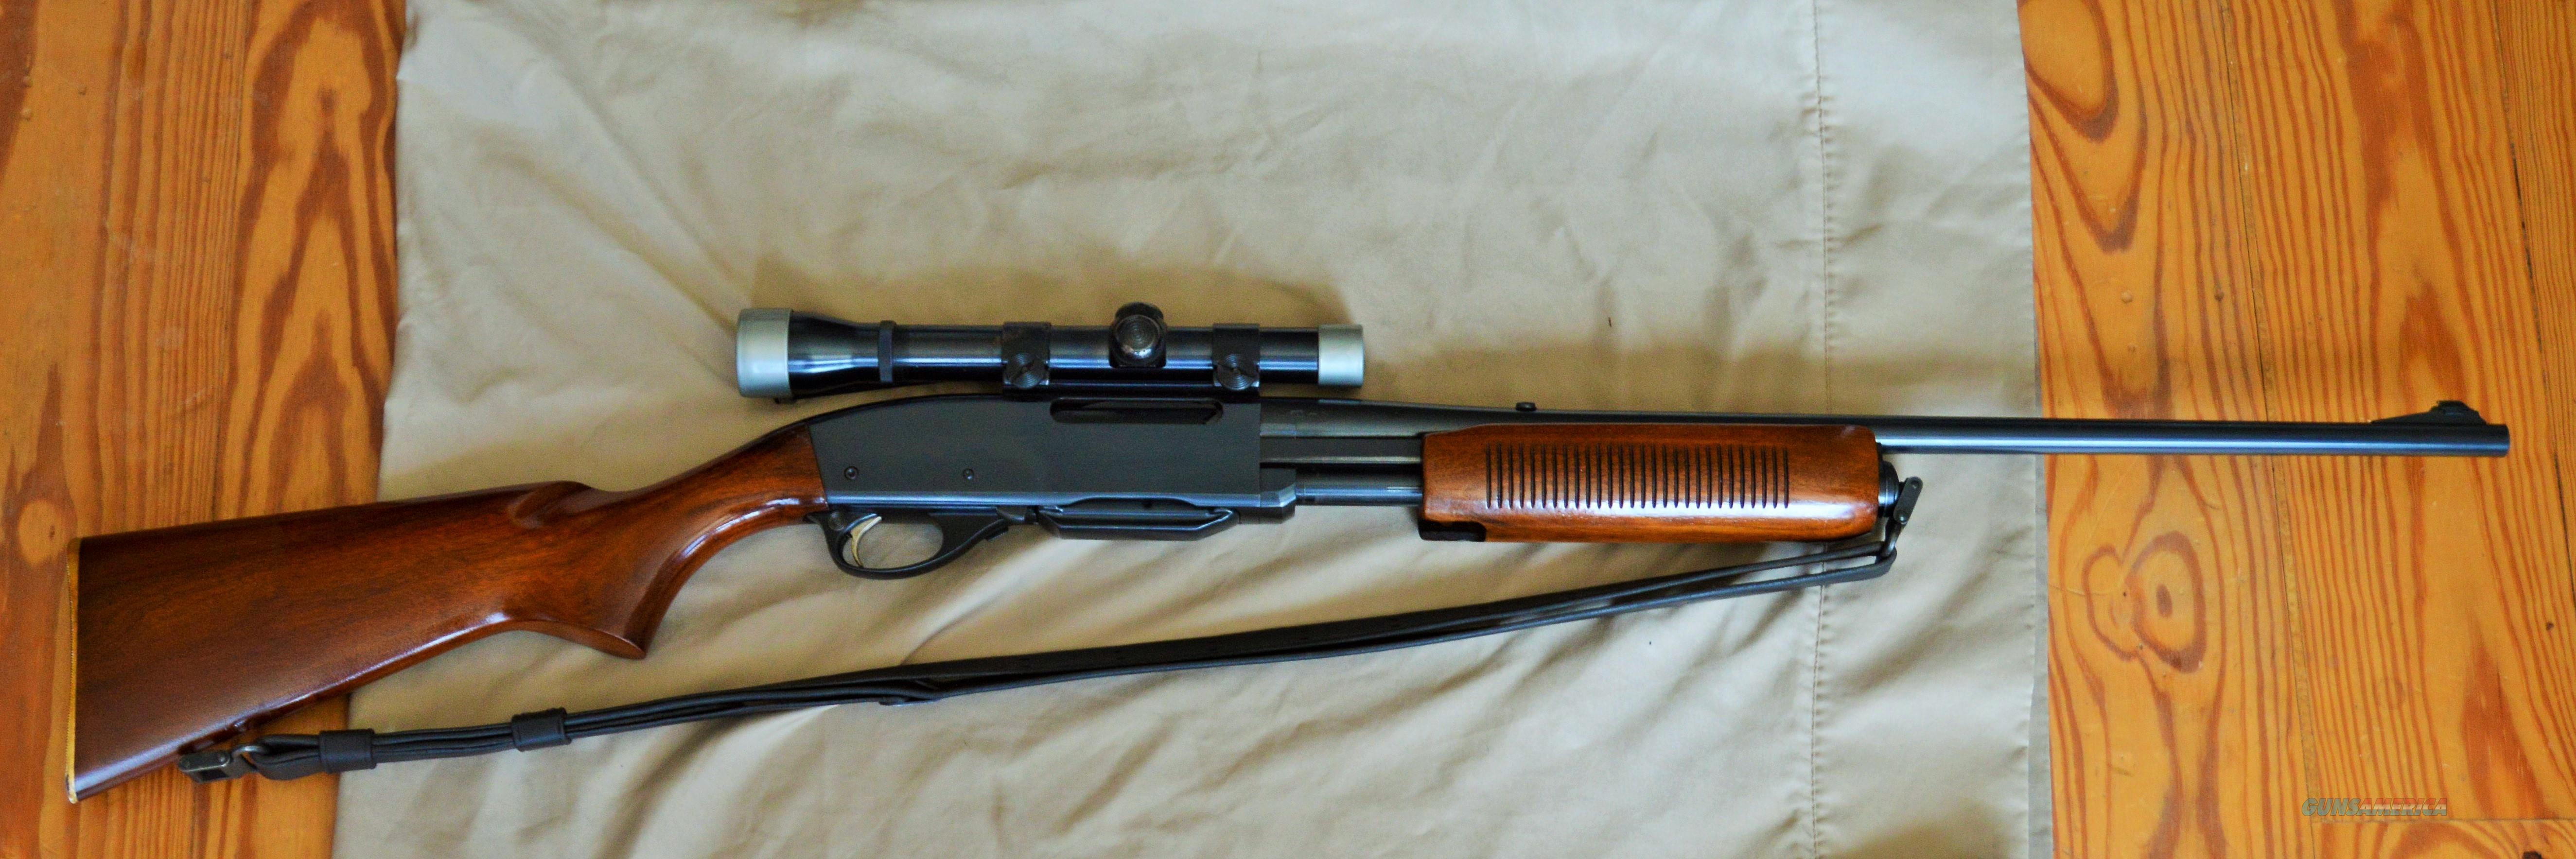 Remington 760 Gamemaster .222 for sale.